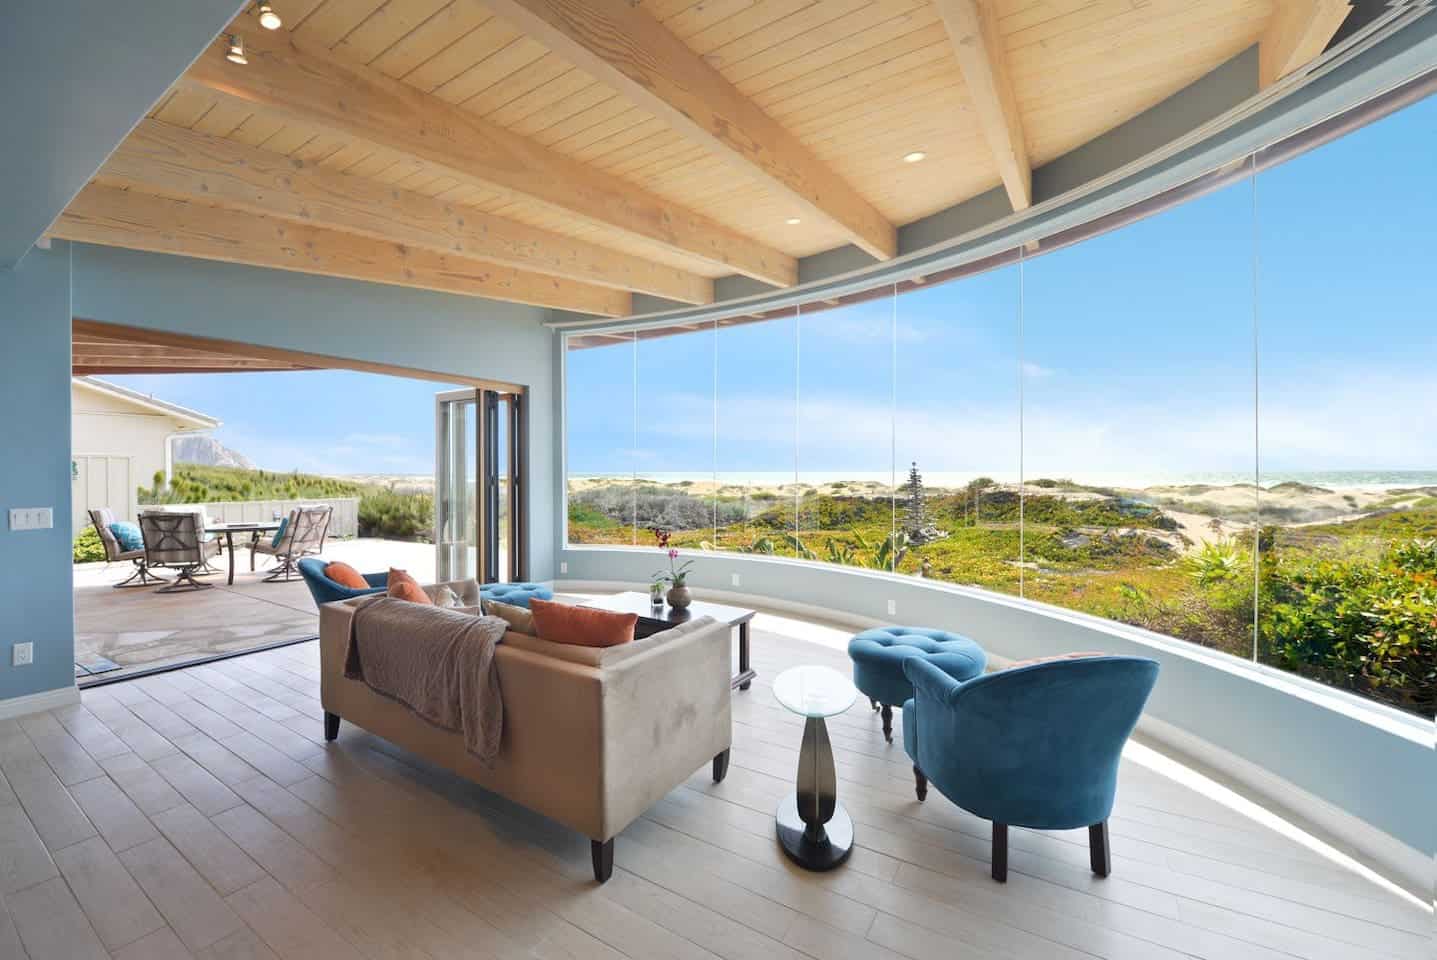 Image of Airbnb rental in San Luis Obispo California